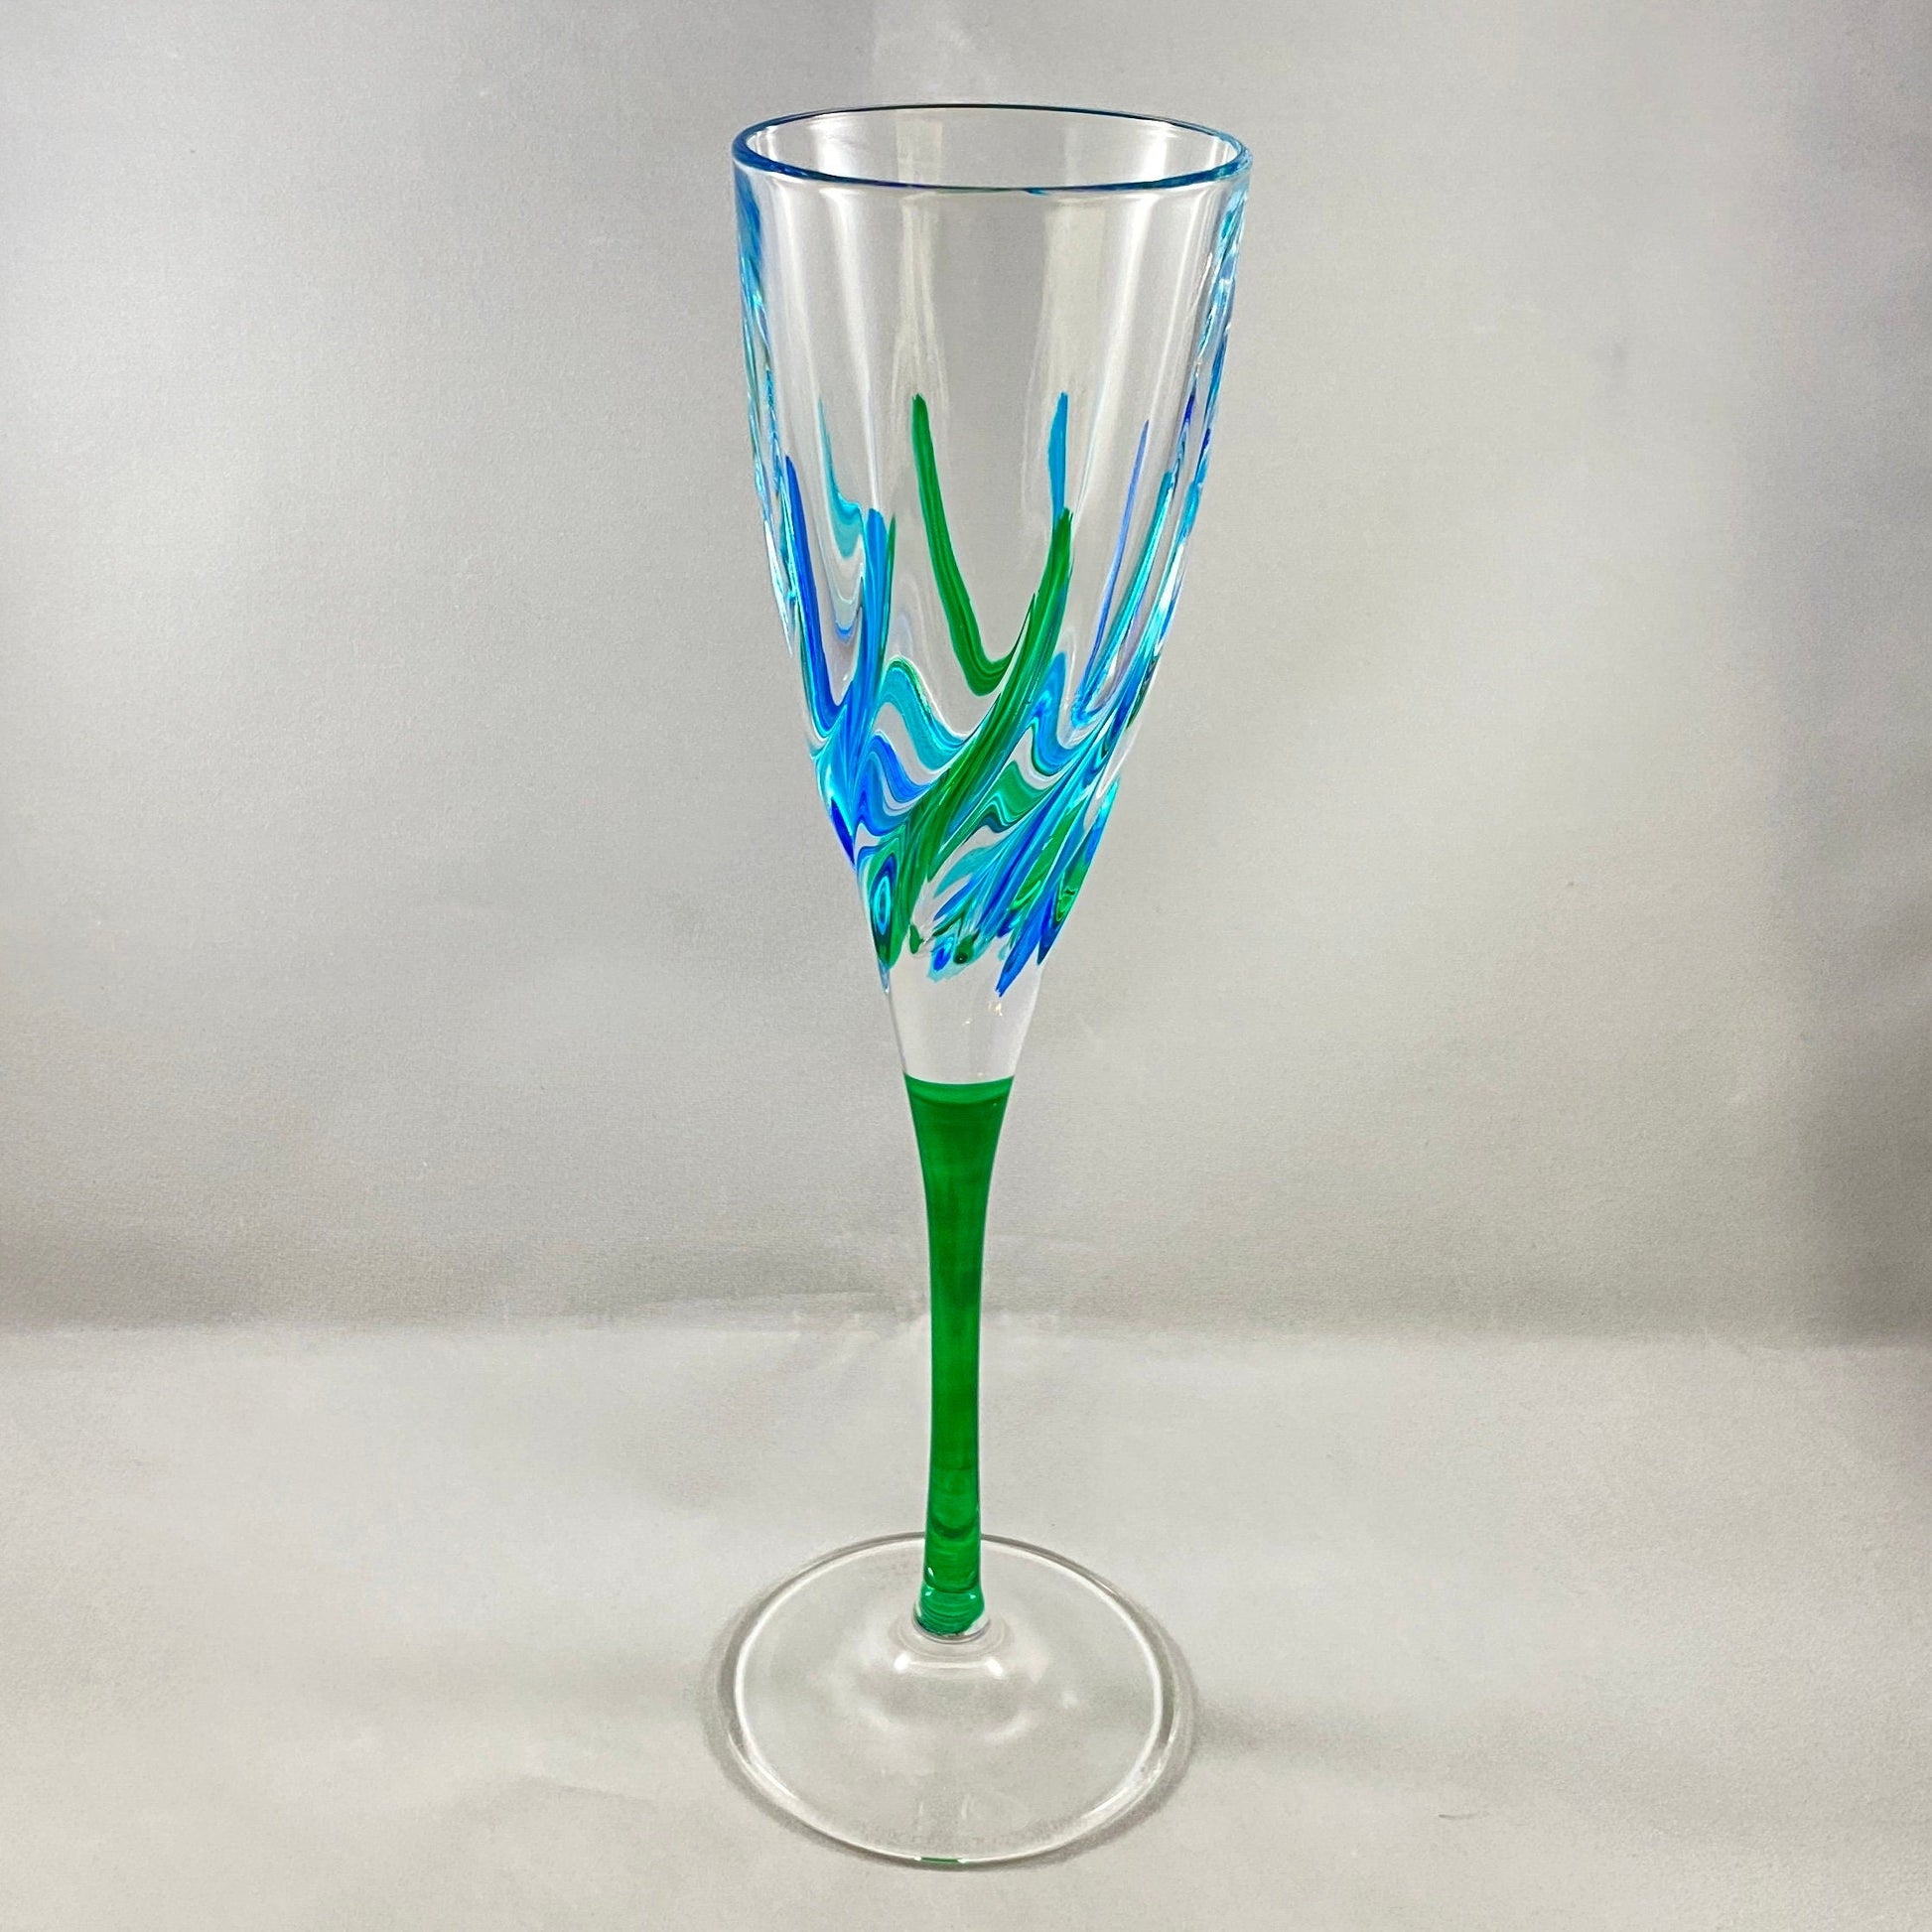 Green Stem Venetian Glass Champagne Glass - Handmade in Italy, Colorful Murano Glass